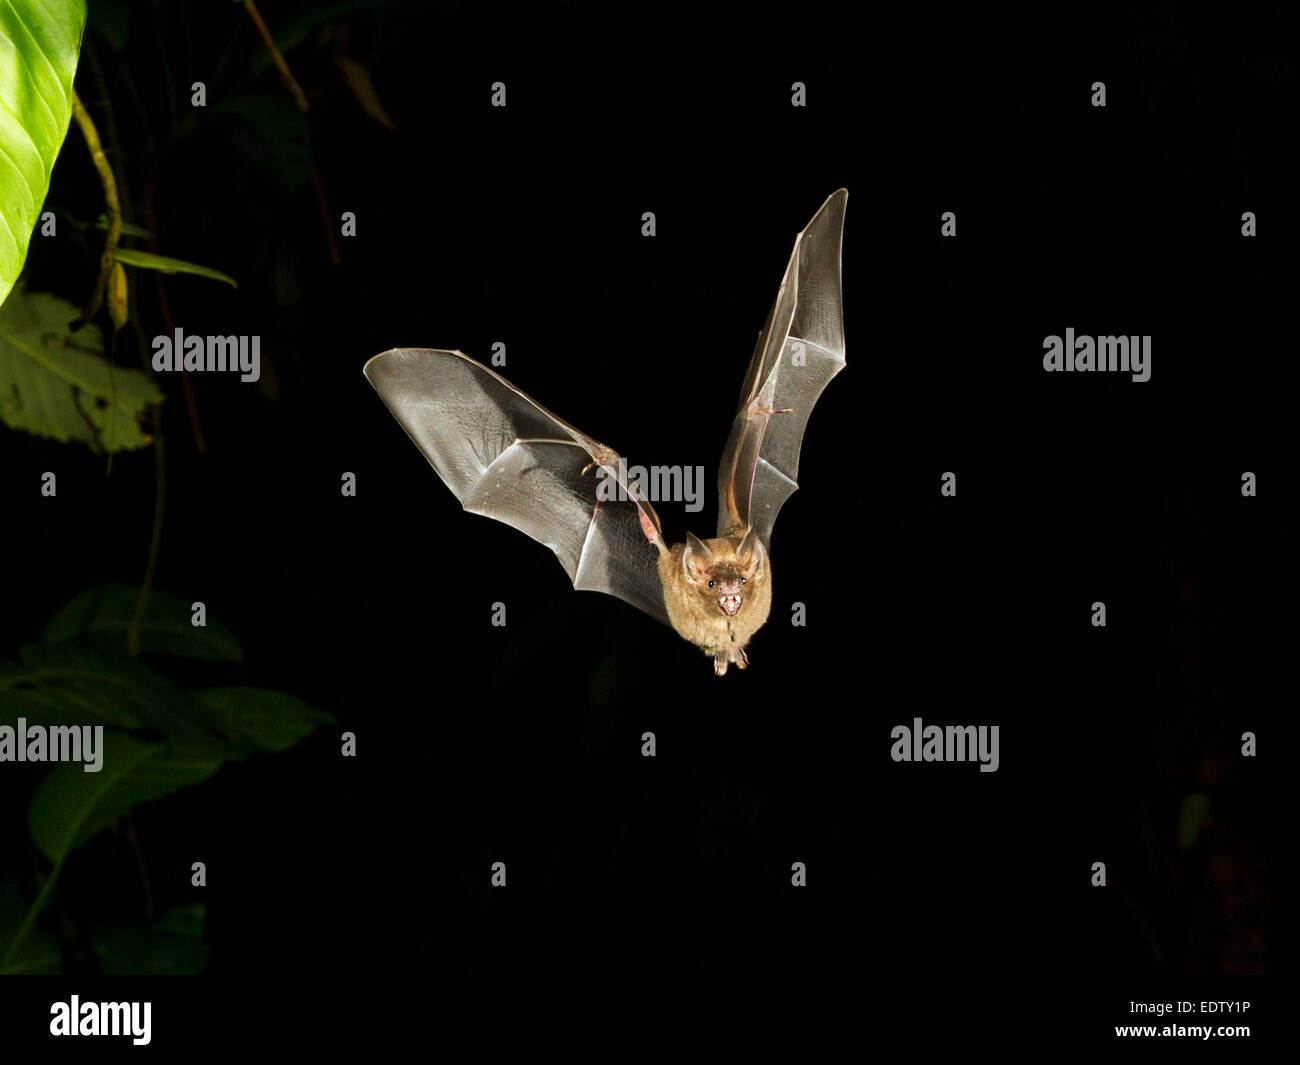 Seba’s short-tailed fruit bat (Carollia perspicillata) flying at night, Tortuguero, Costa Rica. Stock Photo